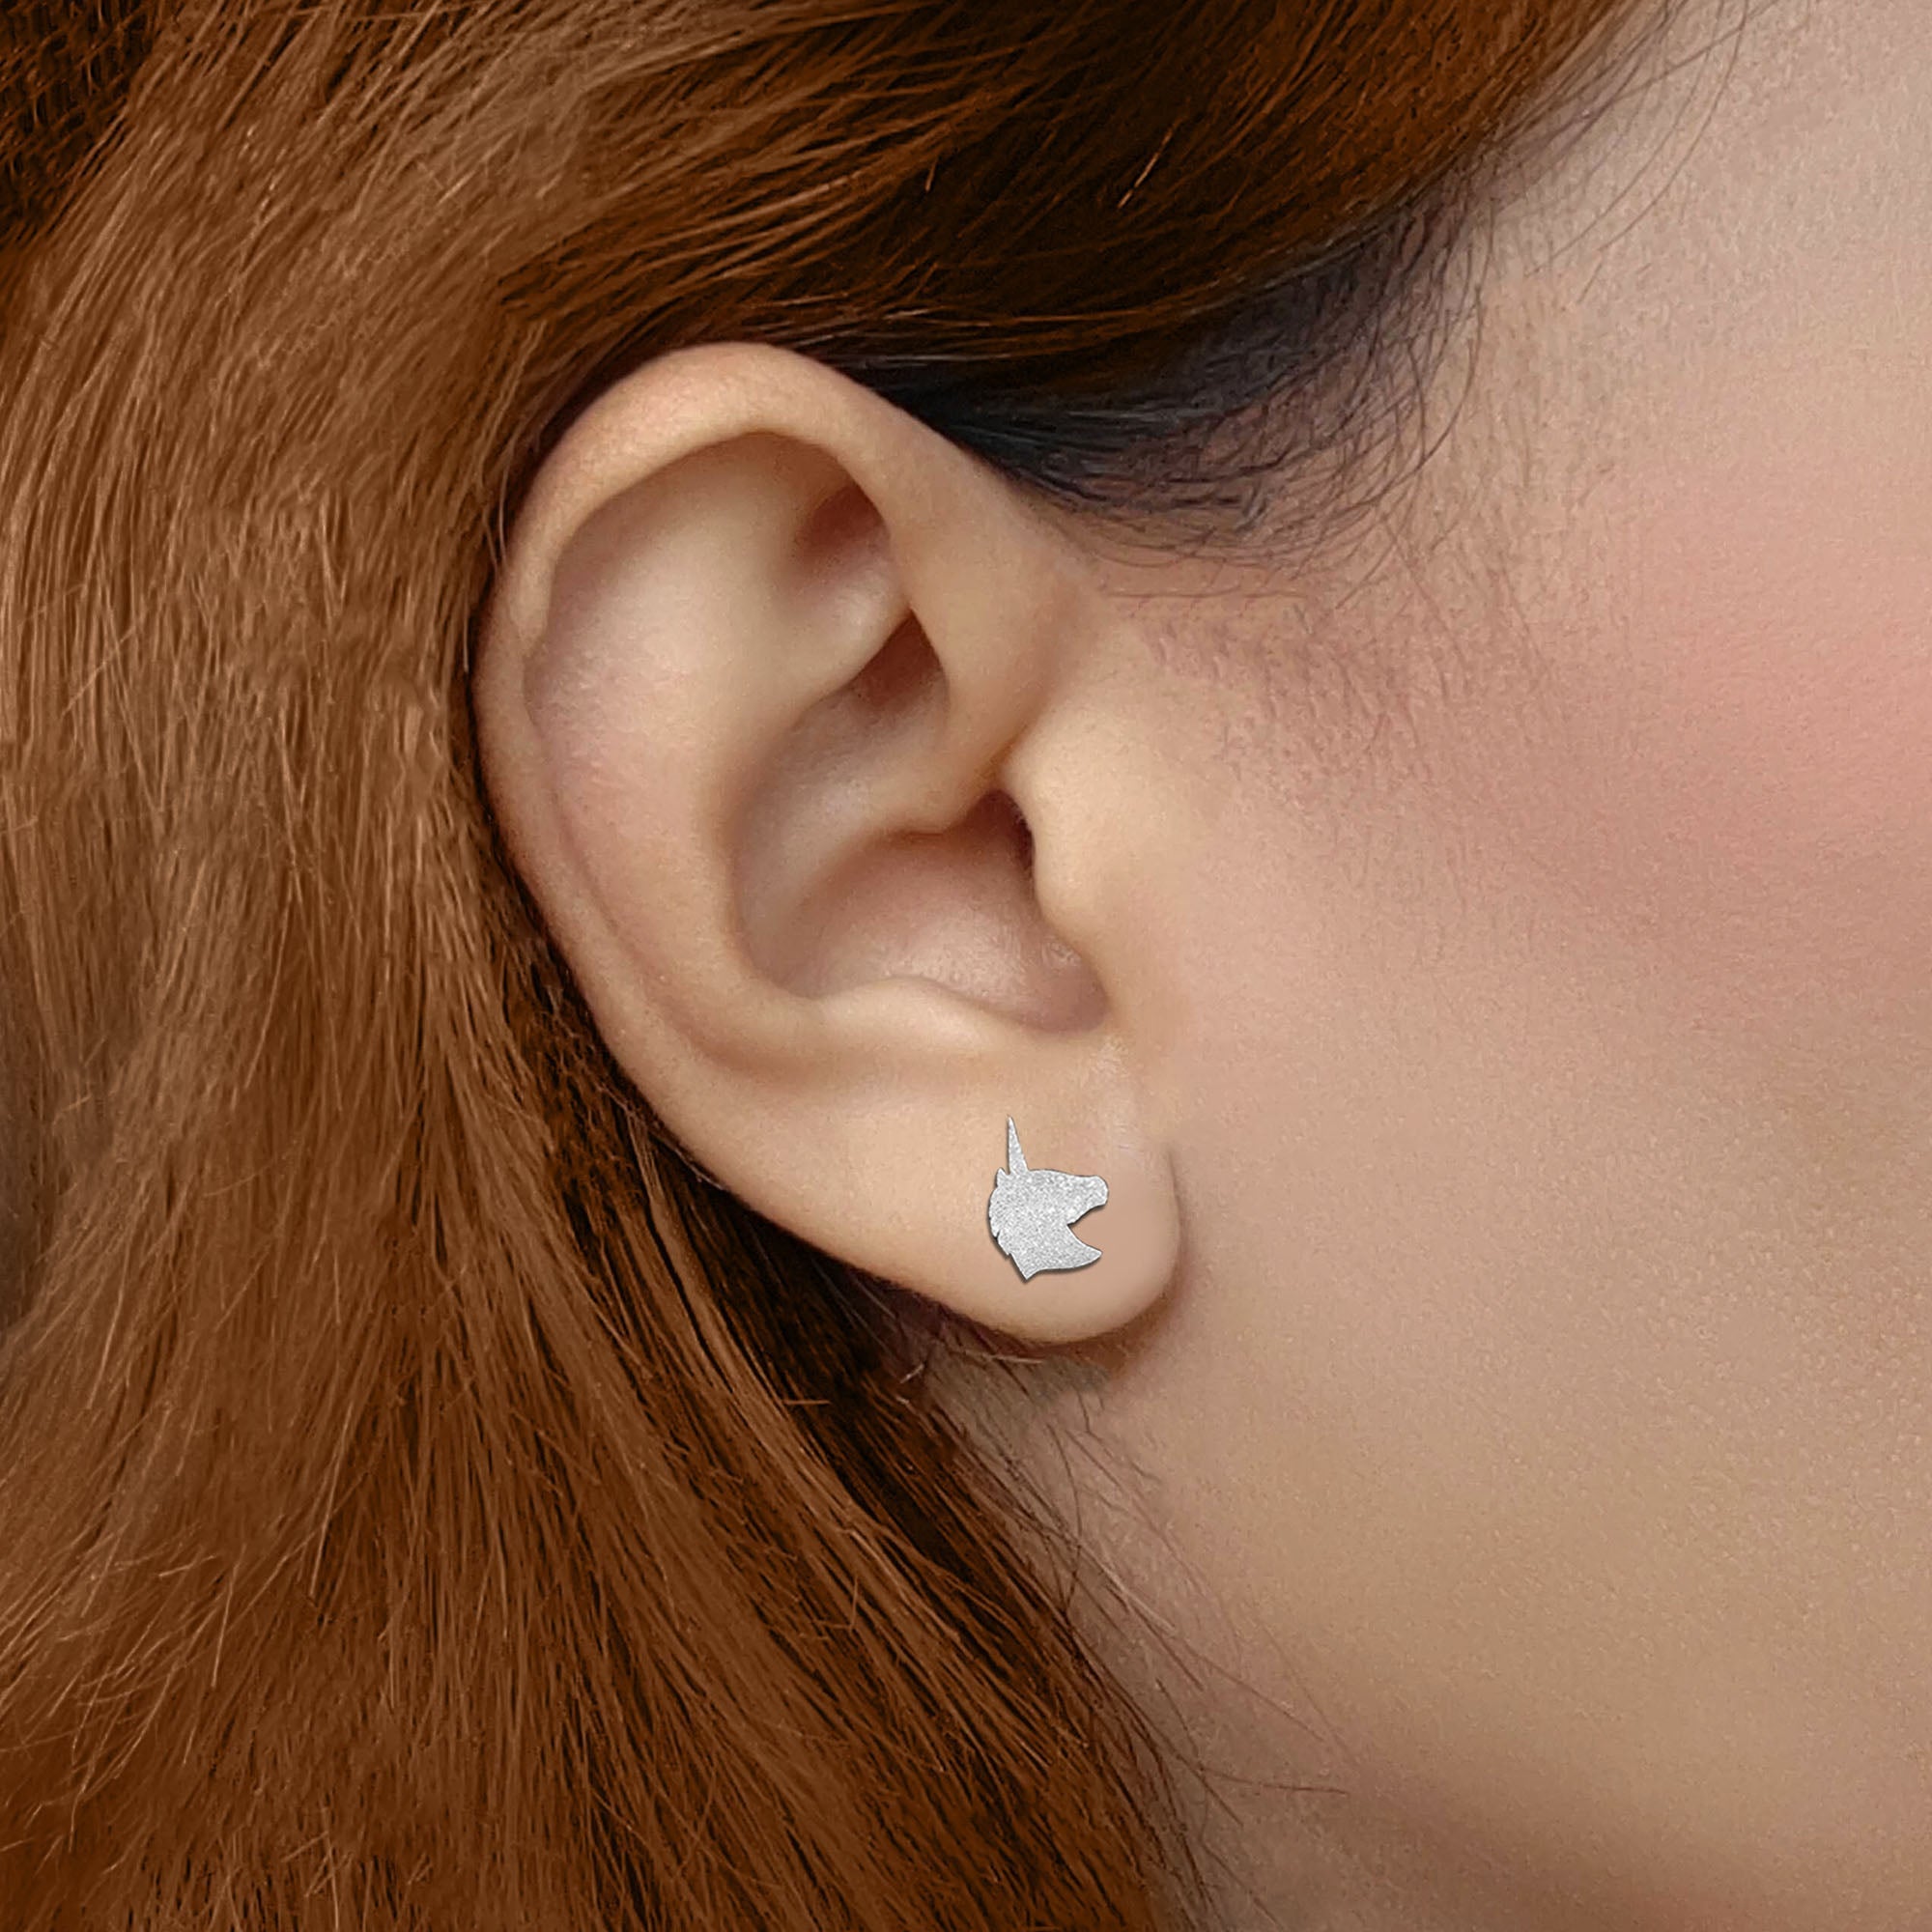 Sparkling Unicorn Earrings - Earrings by Belle Fever